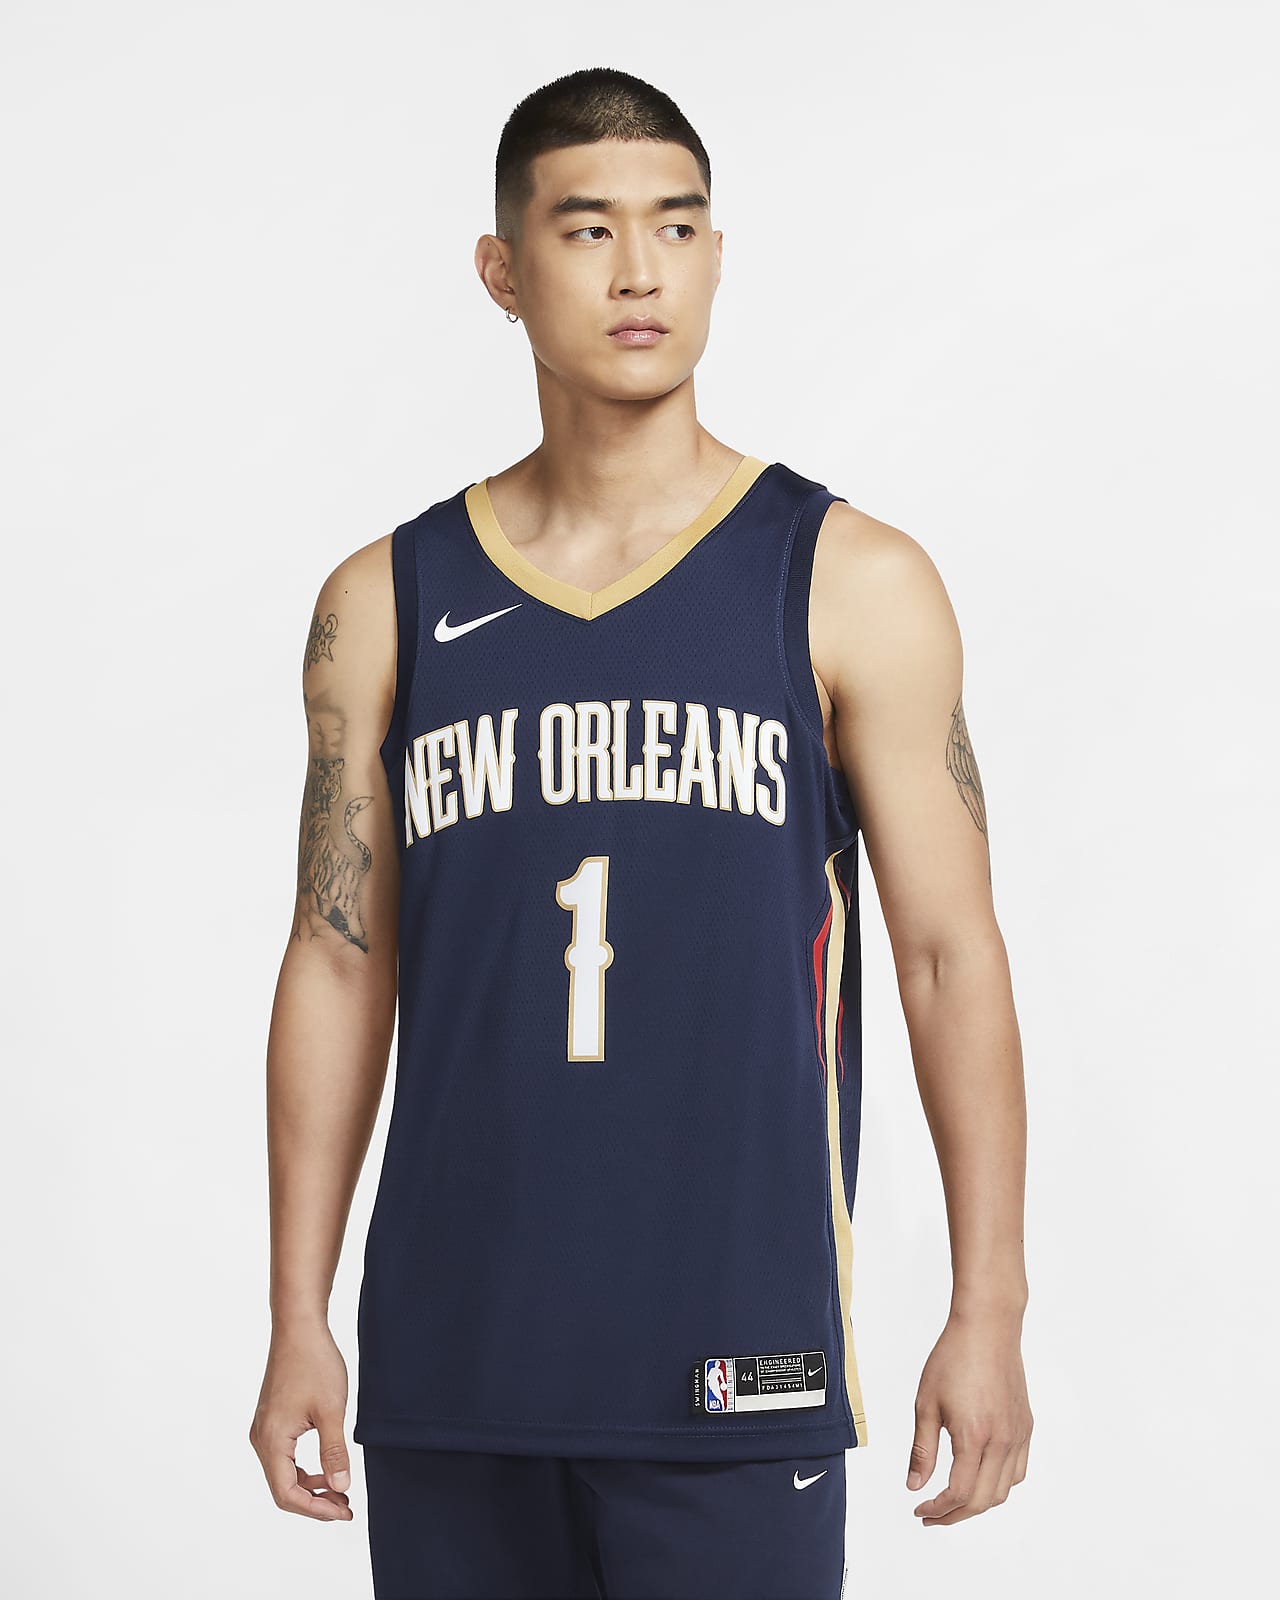 Camiseta Nike NBA Swingman Zion Williamson Pelicans Icon Edition 2020